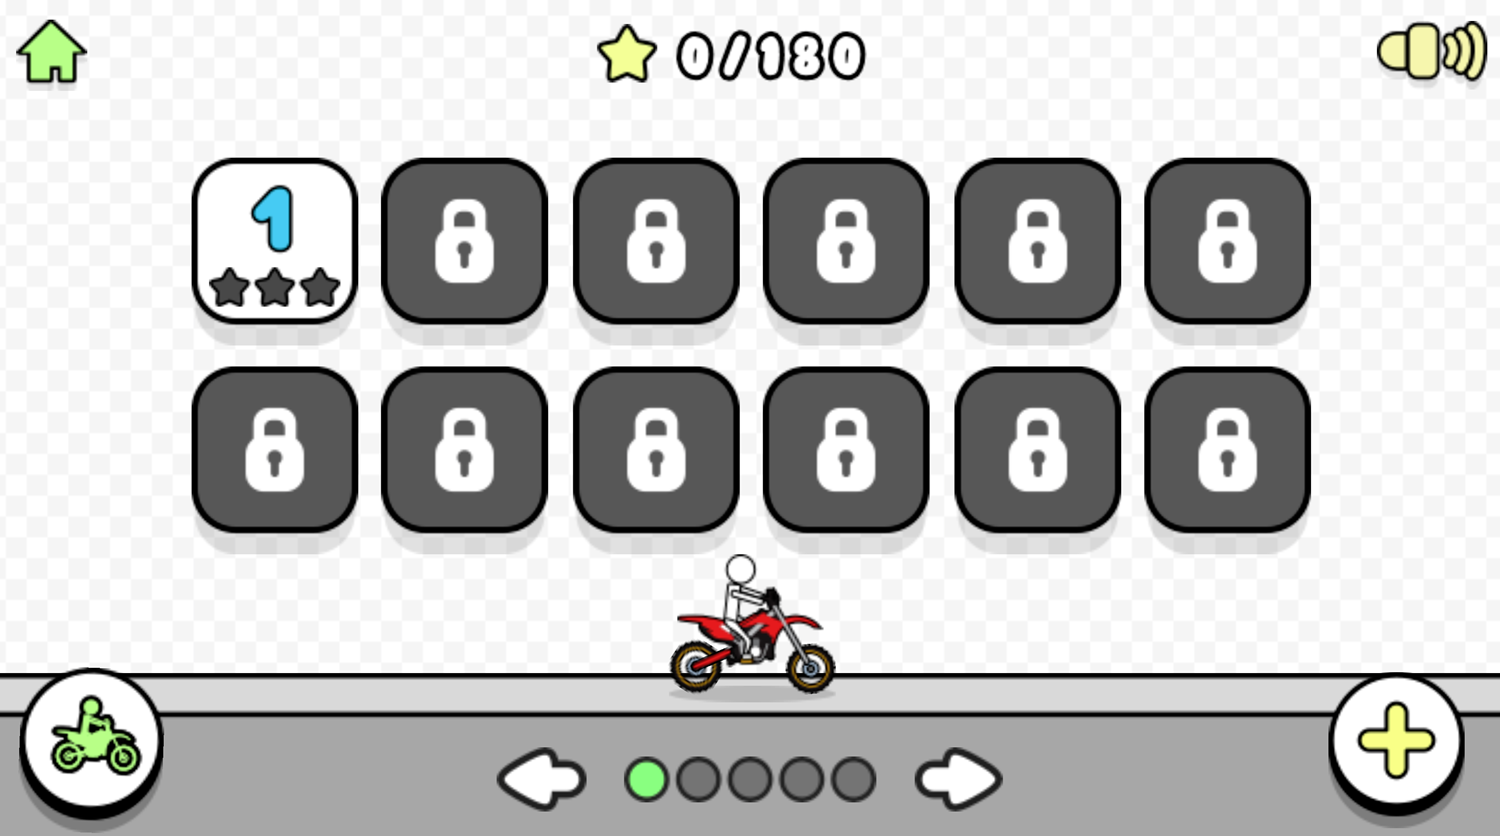 Pocket Racing Game Level Select Screen Screenshot.